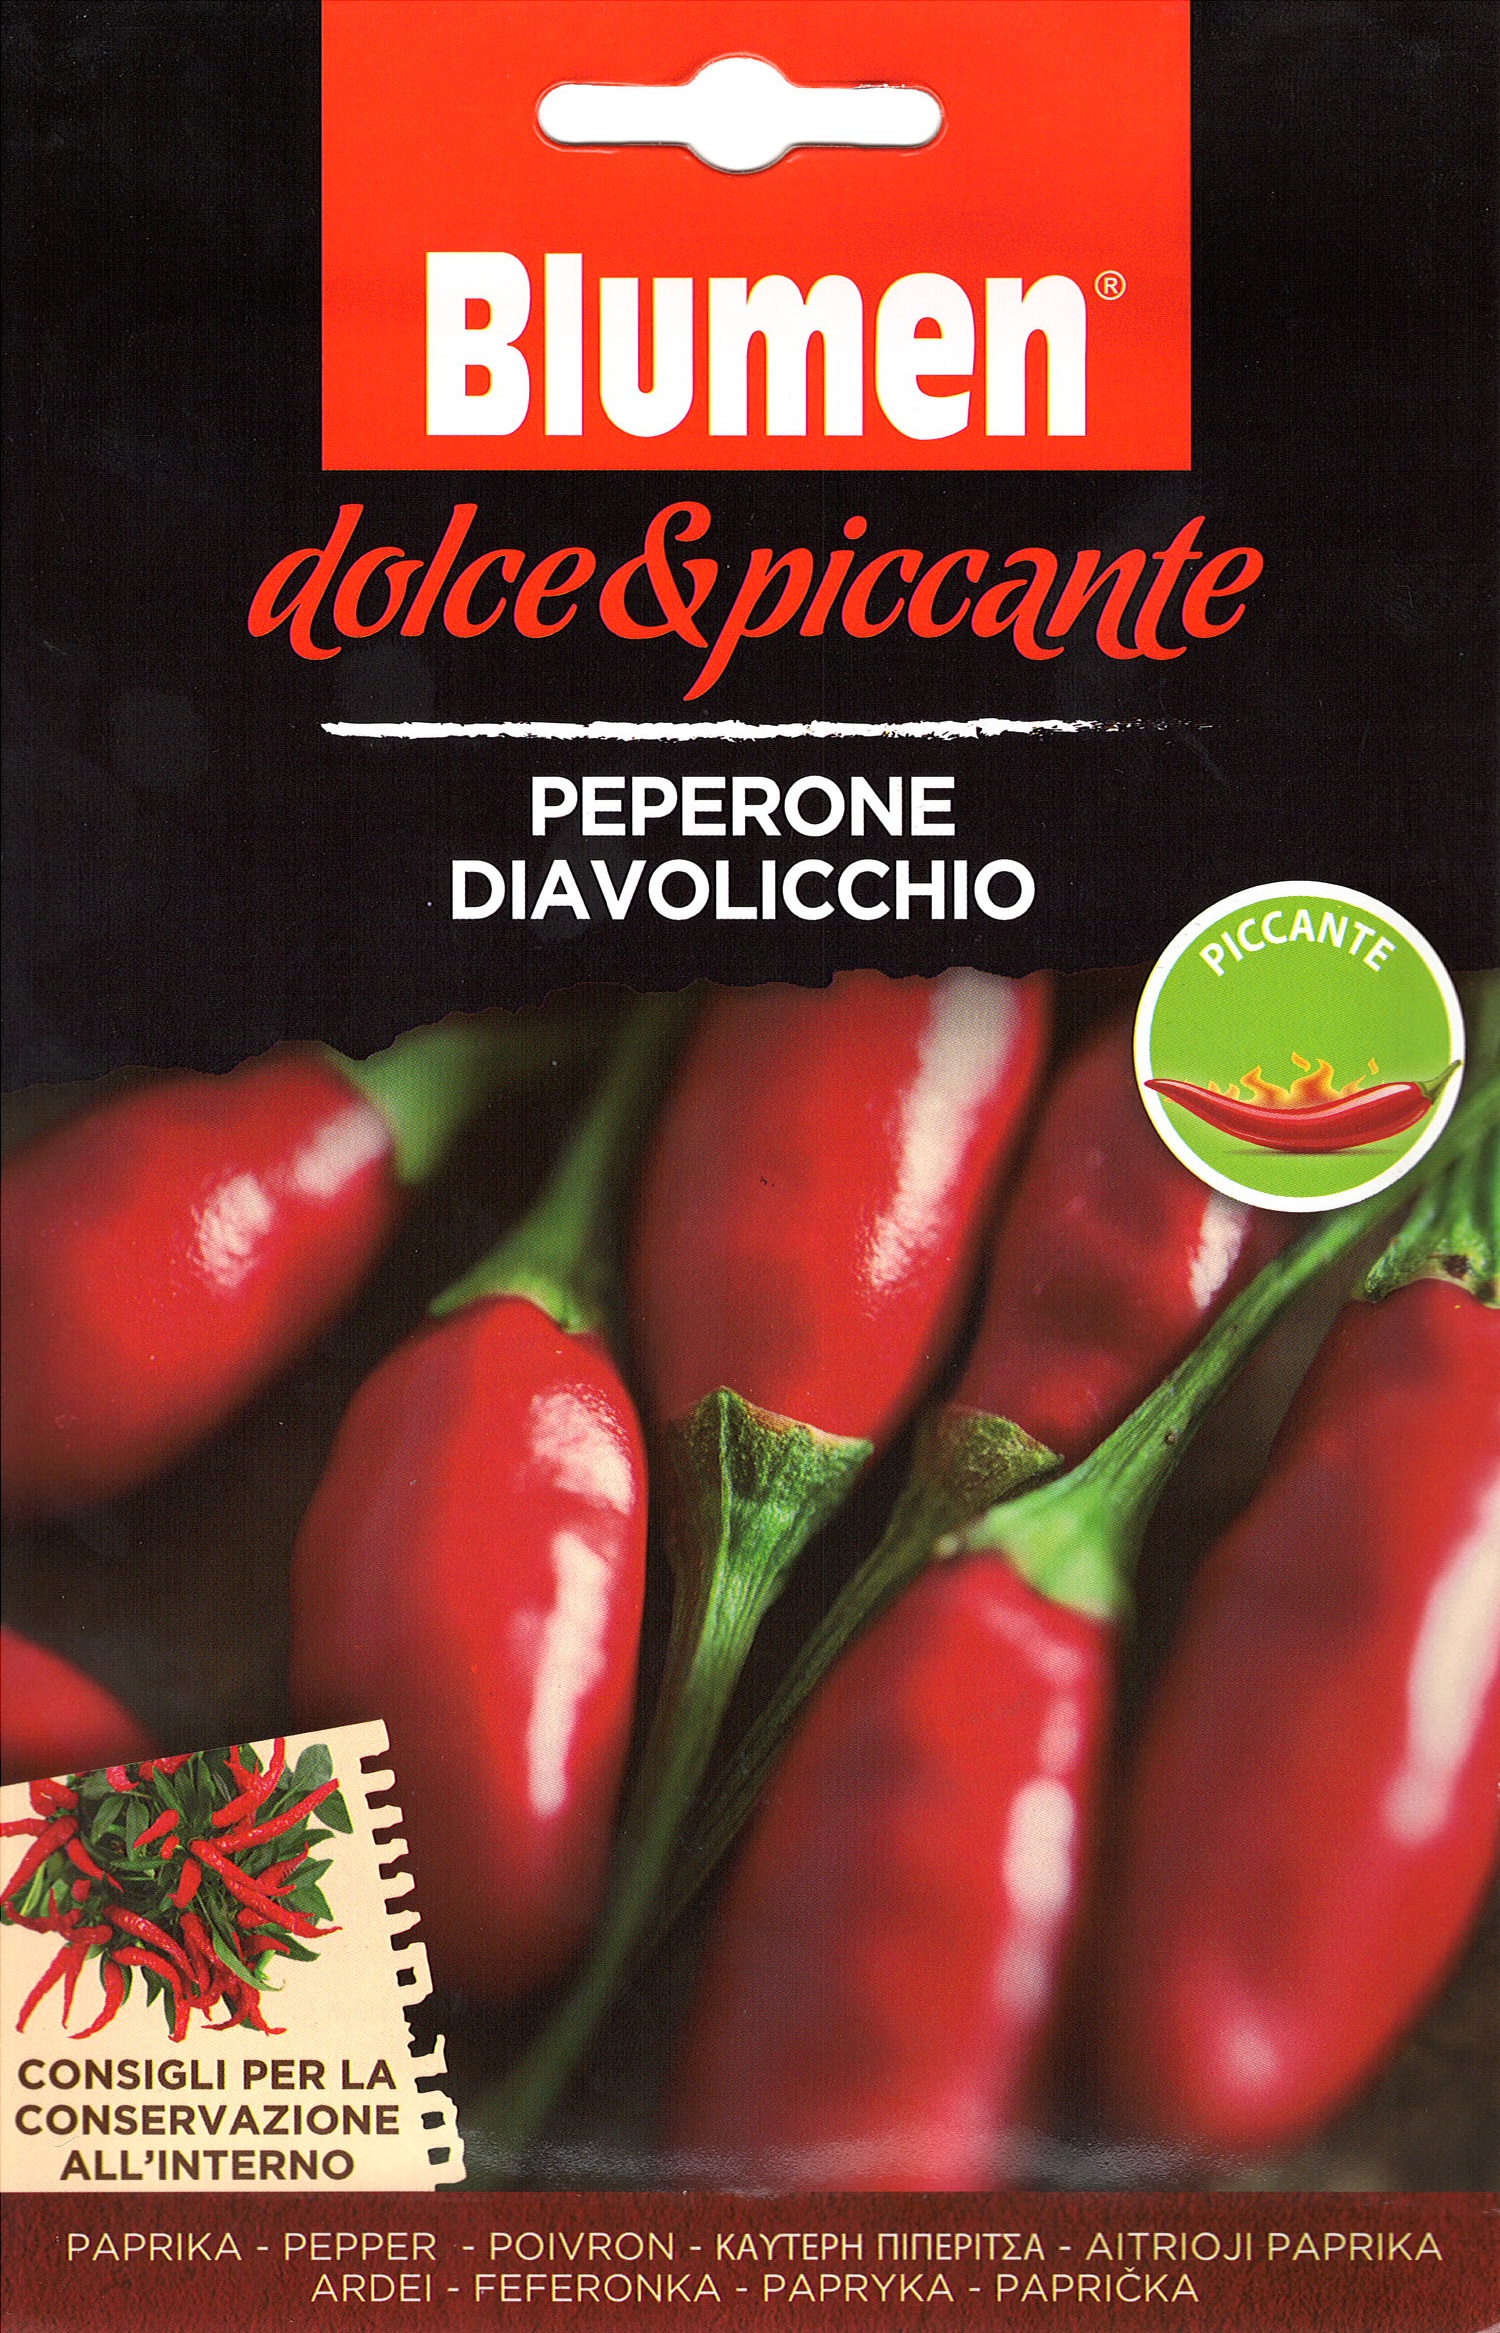 Blumen Paprika - Diavolicchio pepperóni paprika F1 hibrid, csípős